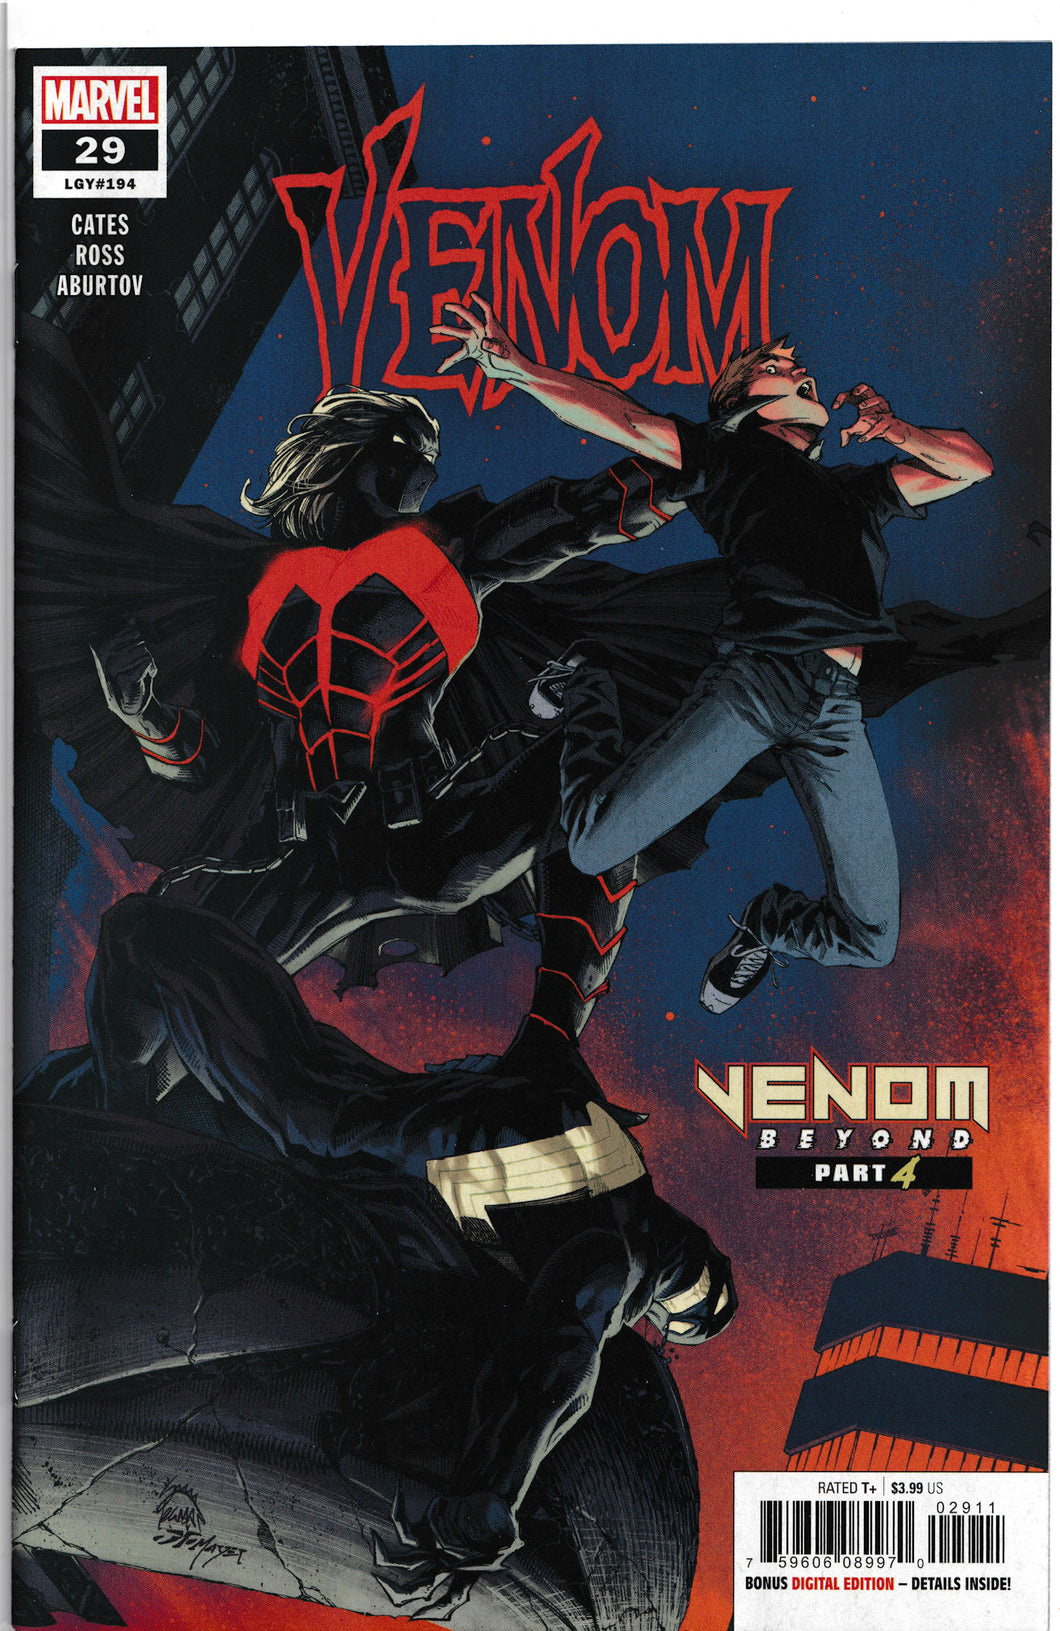 VENOM #29 (1ST PRINT)(VENOM BEYOND) COMIC BOOK ~ Marvel Comics